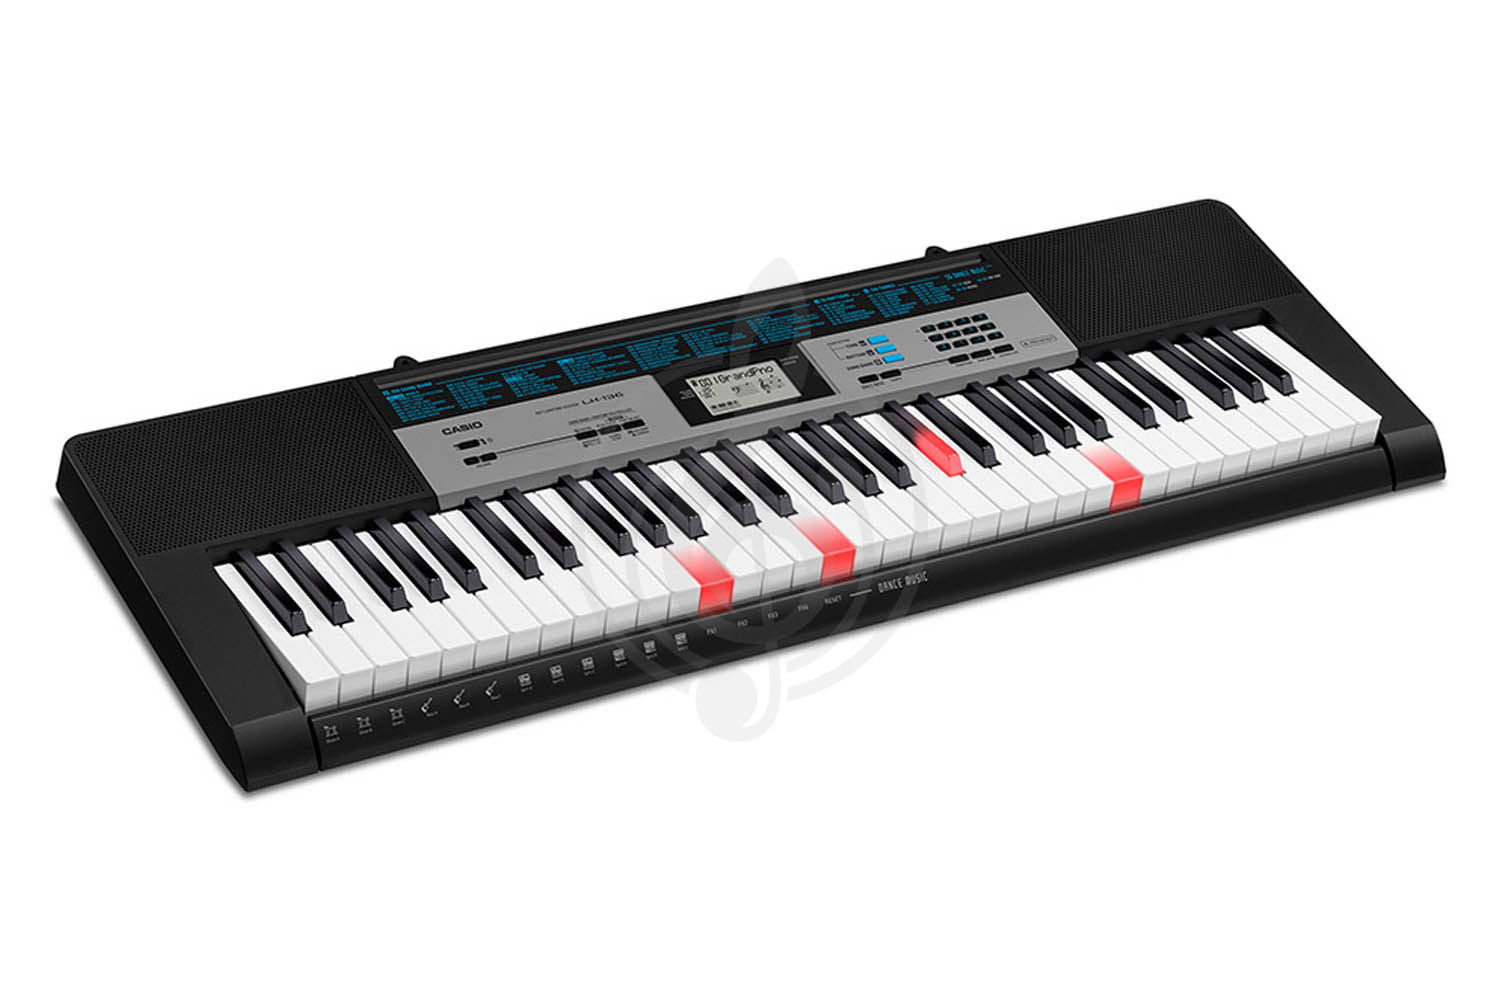 Домашний синтезатор Домашние синтезаторы Casio Casio LK-136 - цифровой синтезатор с подсветкой клавиш LK-136 - фото 2